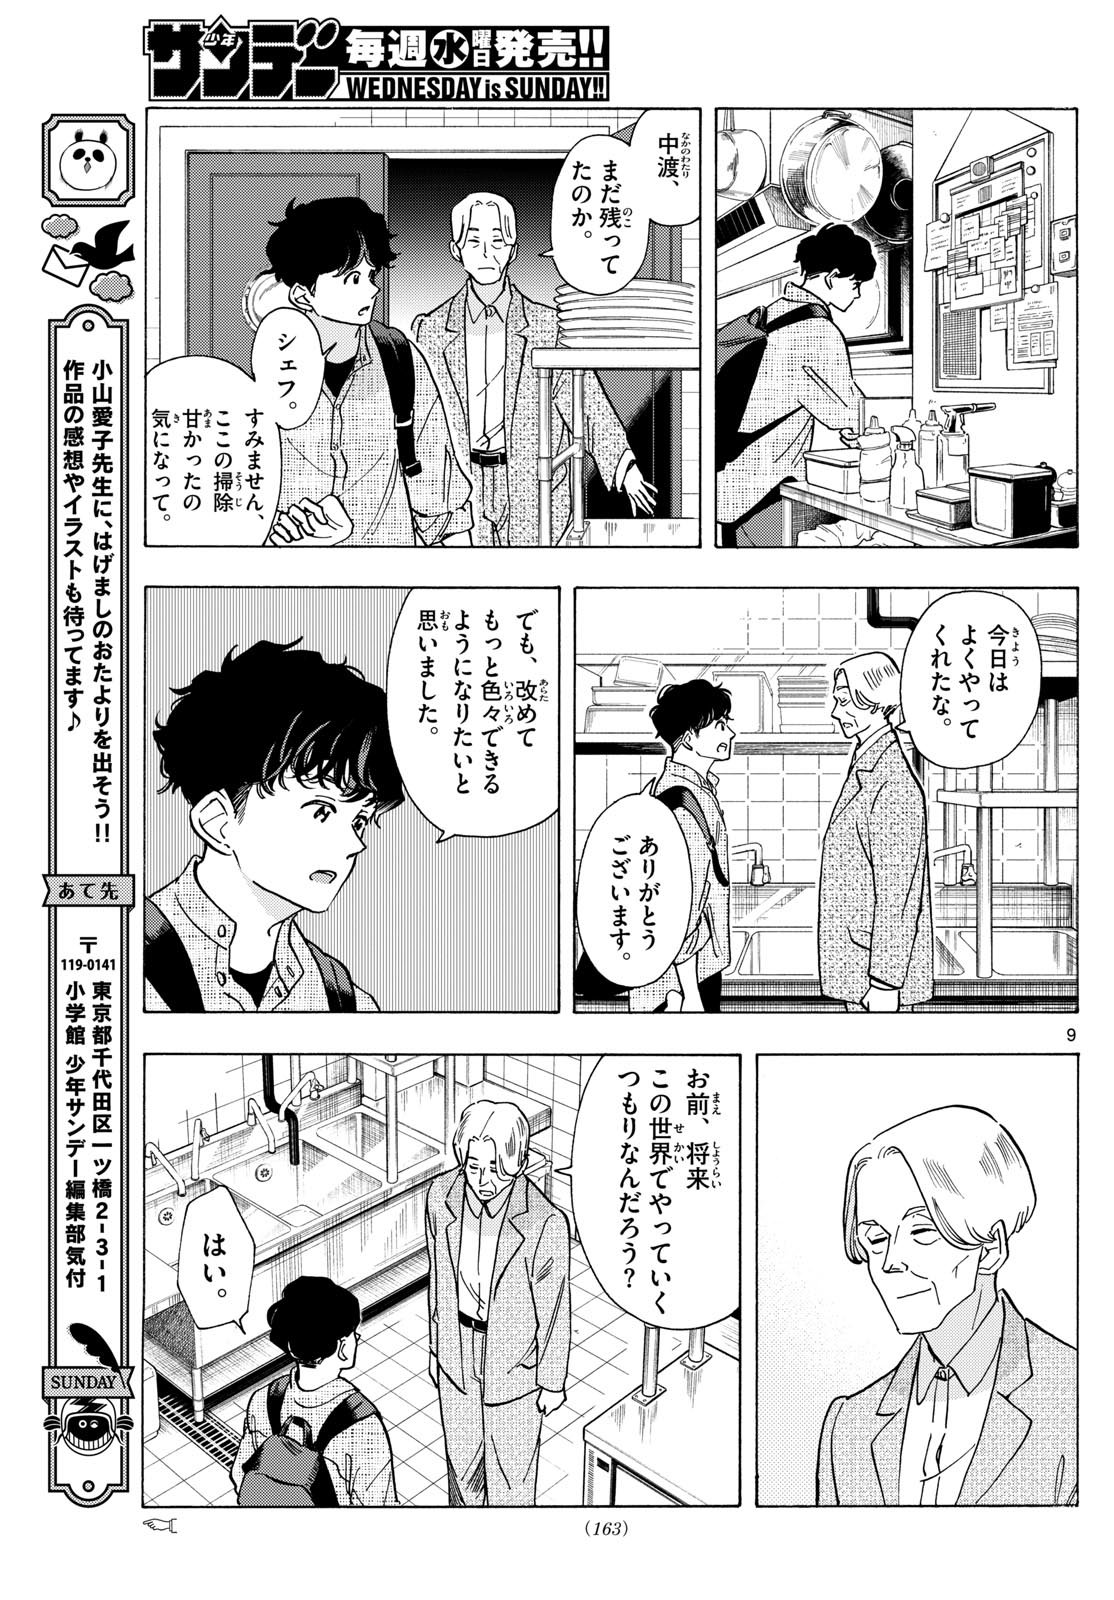 Maiko-san Chi no Makanai-san - Chapter 292 - Page 9